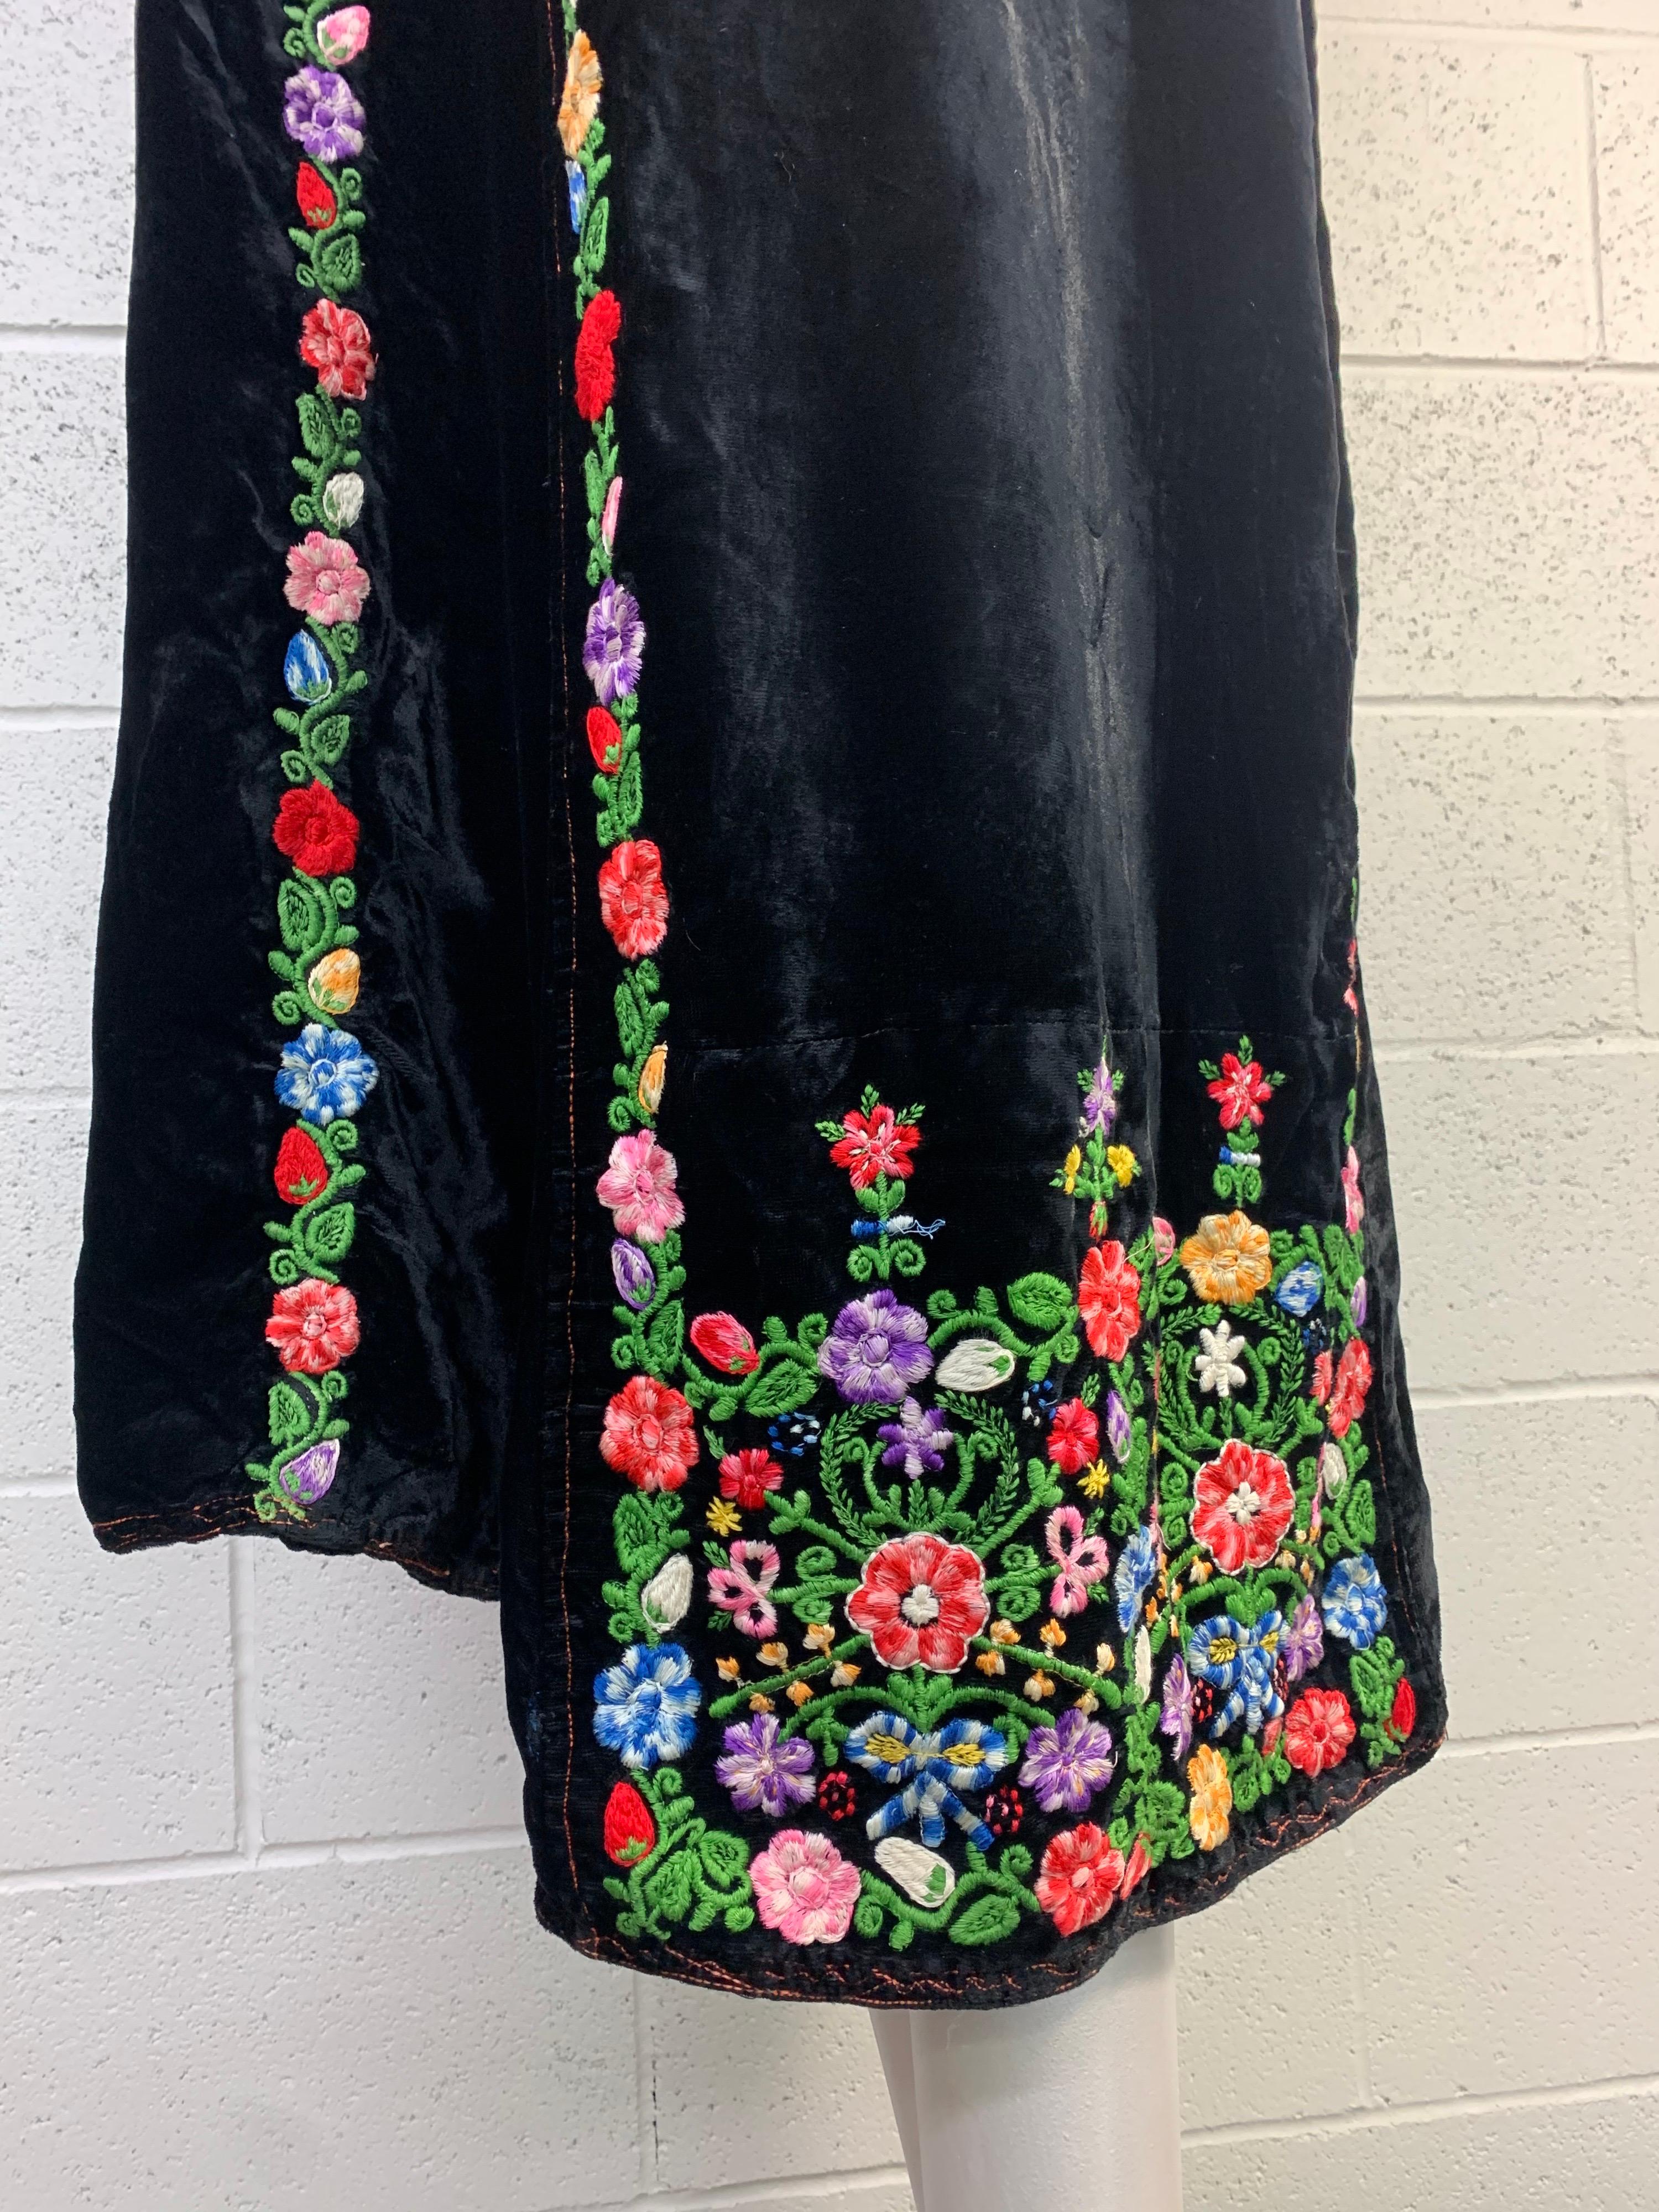 Women's 1960s Boho Renaissance-Styled Black Velvet Dress w/ Floral Embroidery Panels. 